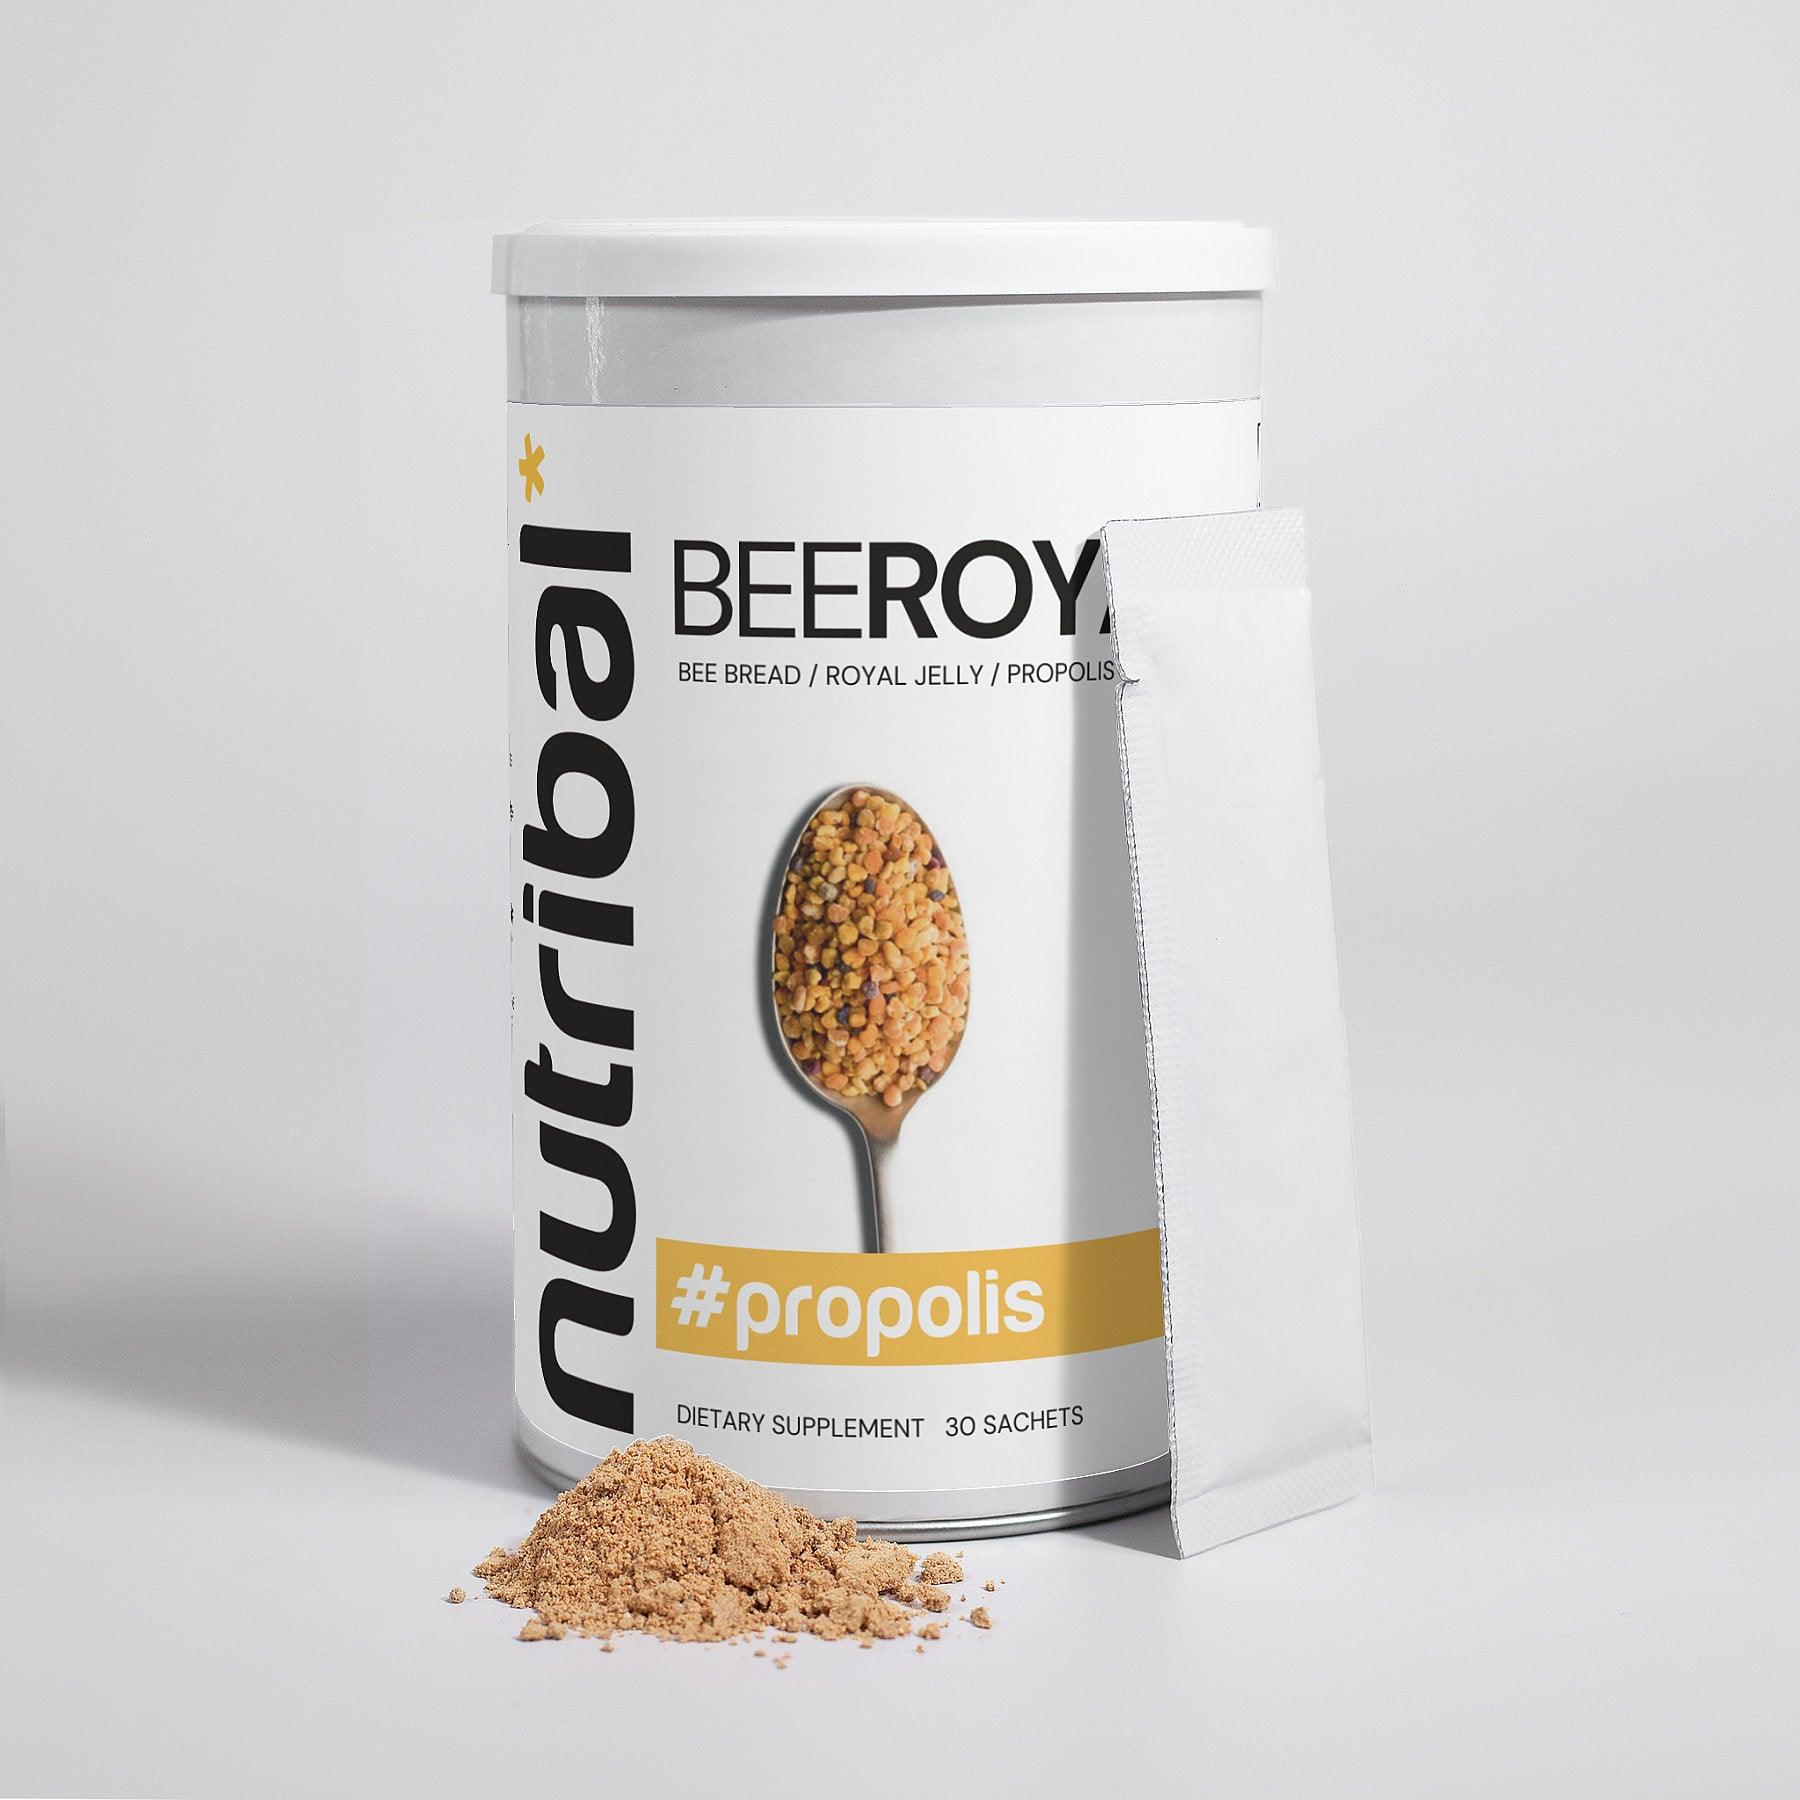 Nutribal BEE ROYAL Propolis Beewax Jelly - Nutribal™ - The New Healthy.